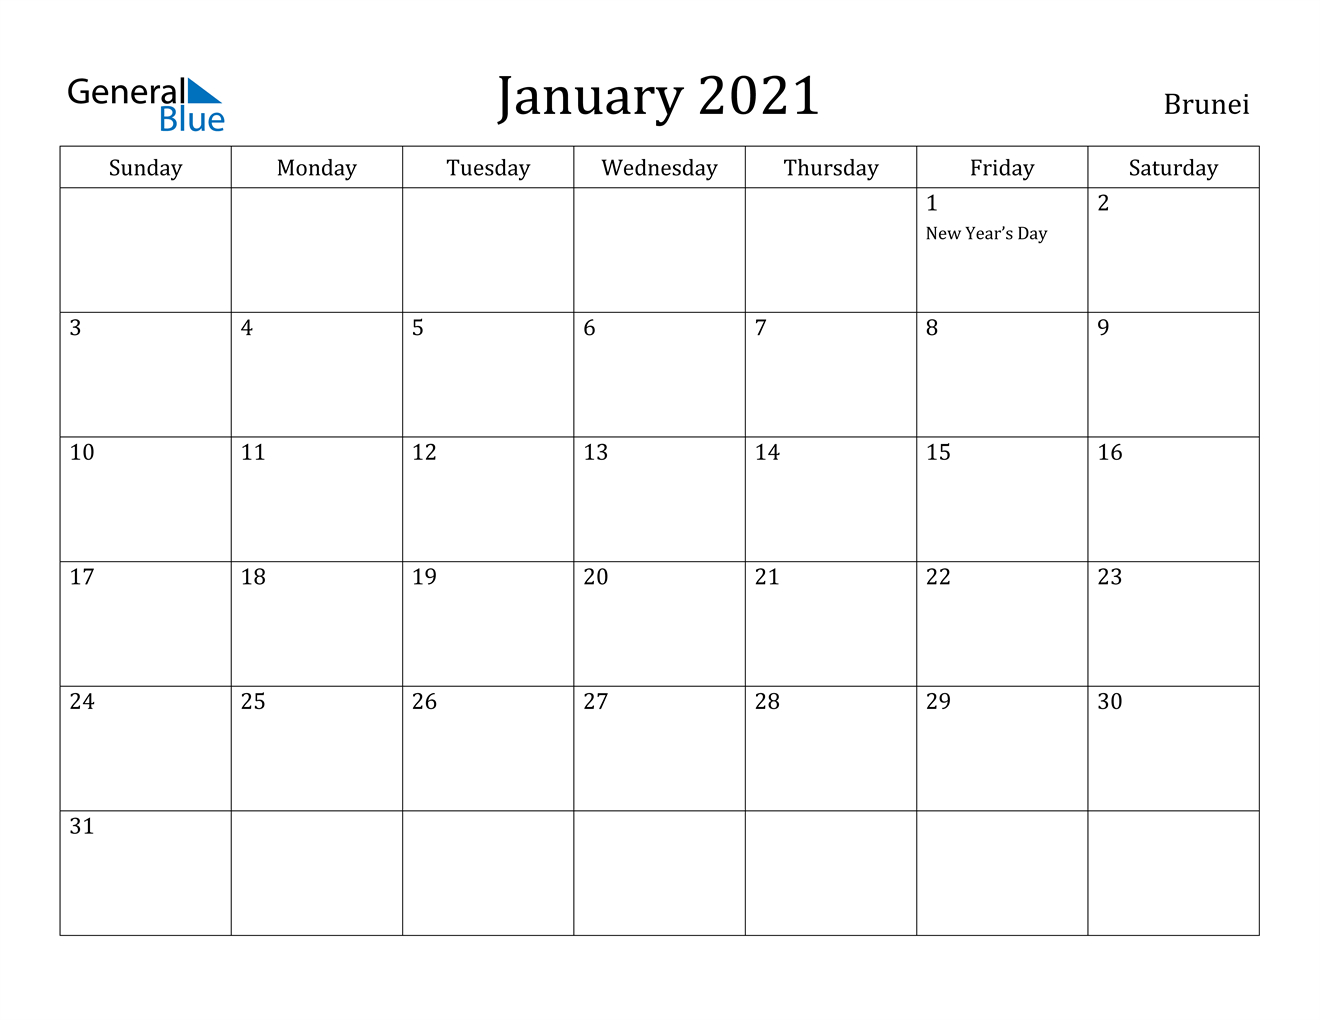 January 2021 Calendar - Brunei